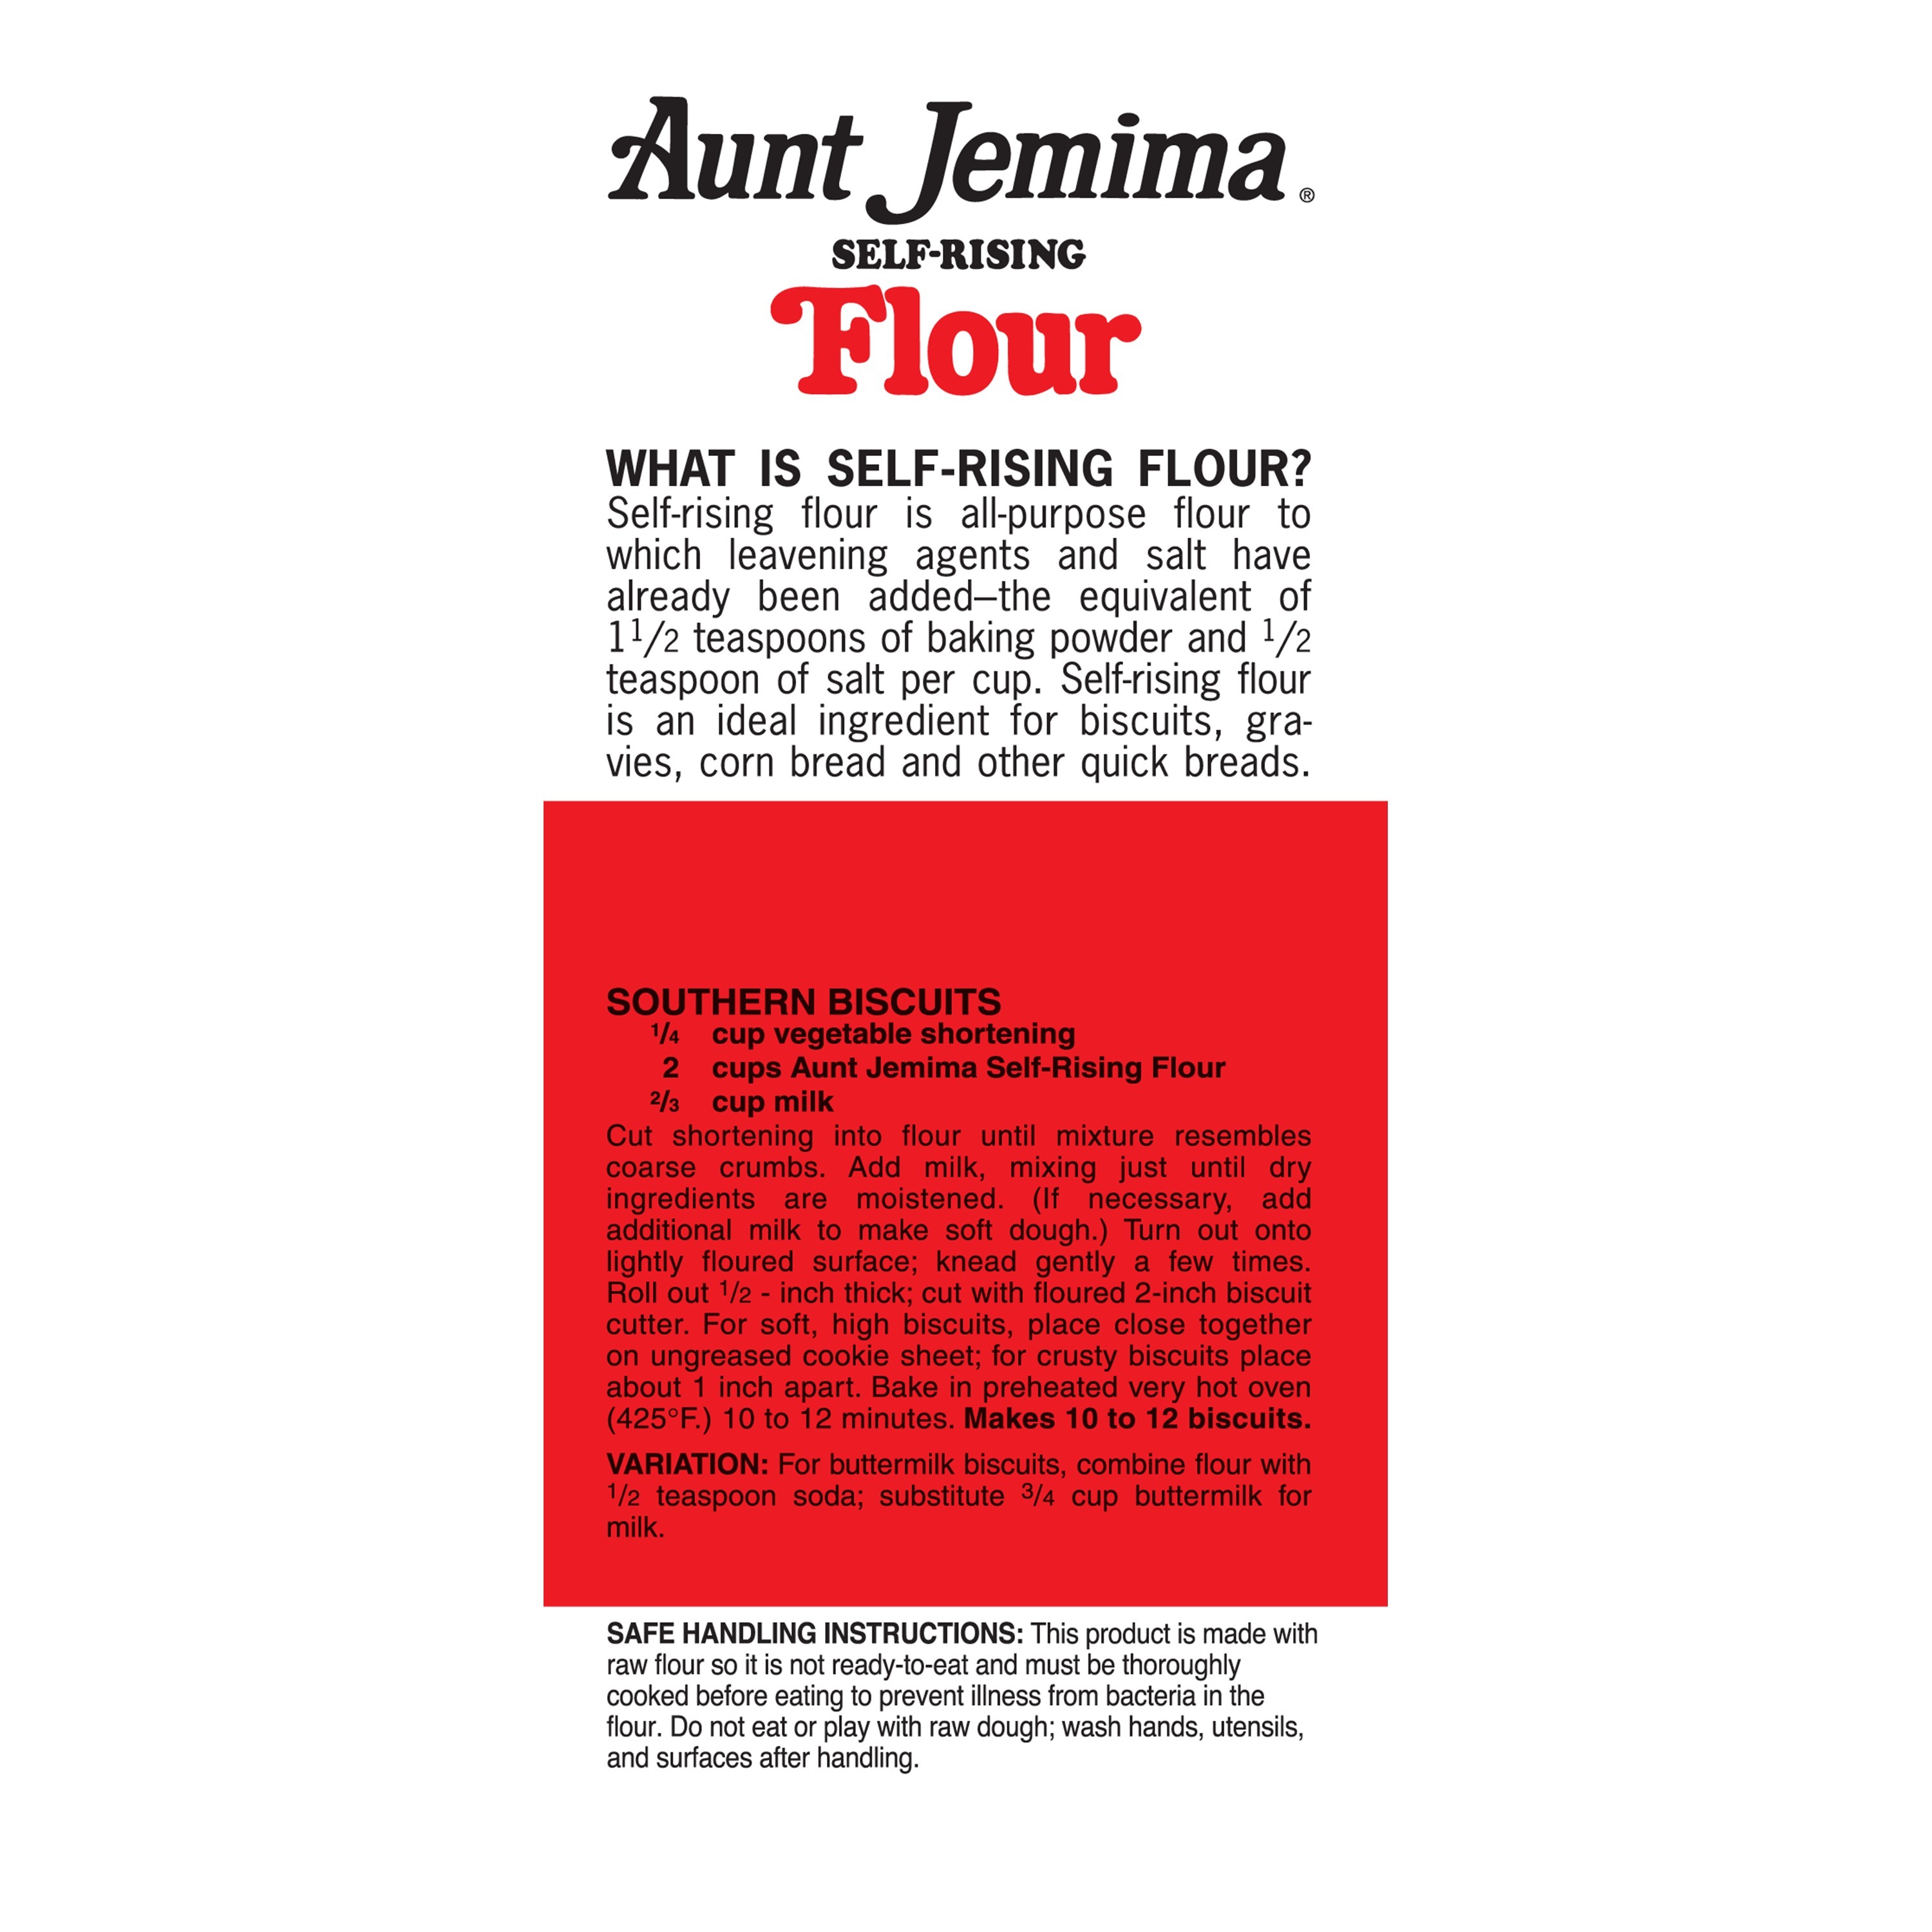 Aunt Jemima Self-Rising Flour, 5 lb Bag - image 4 of 7